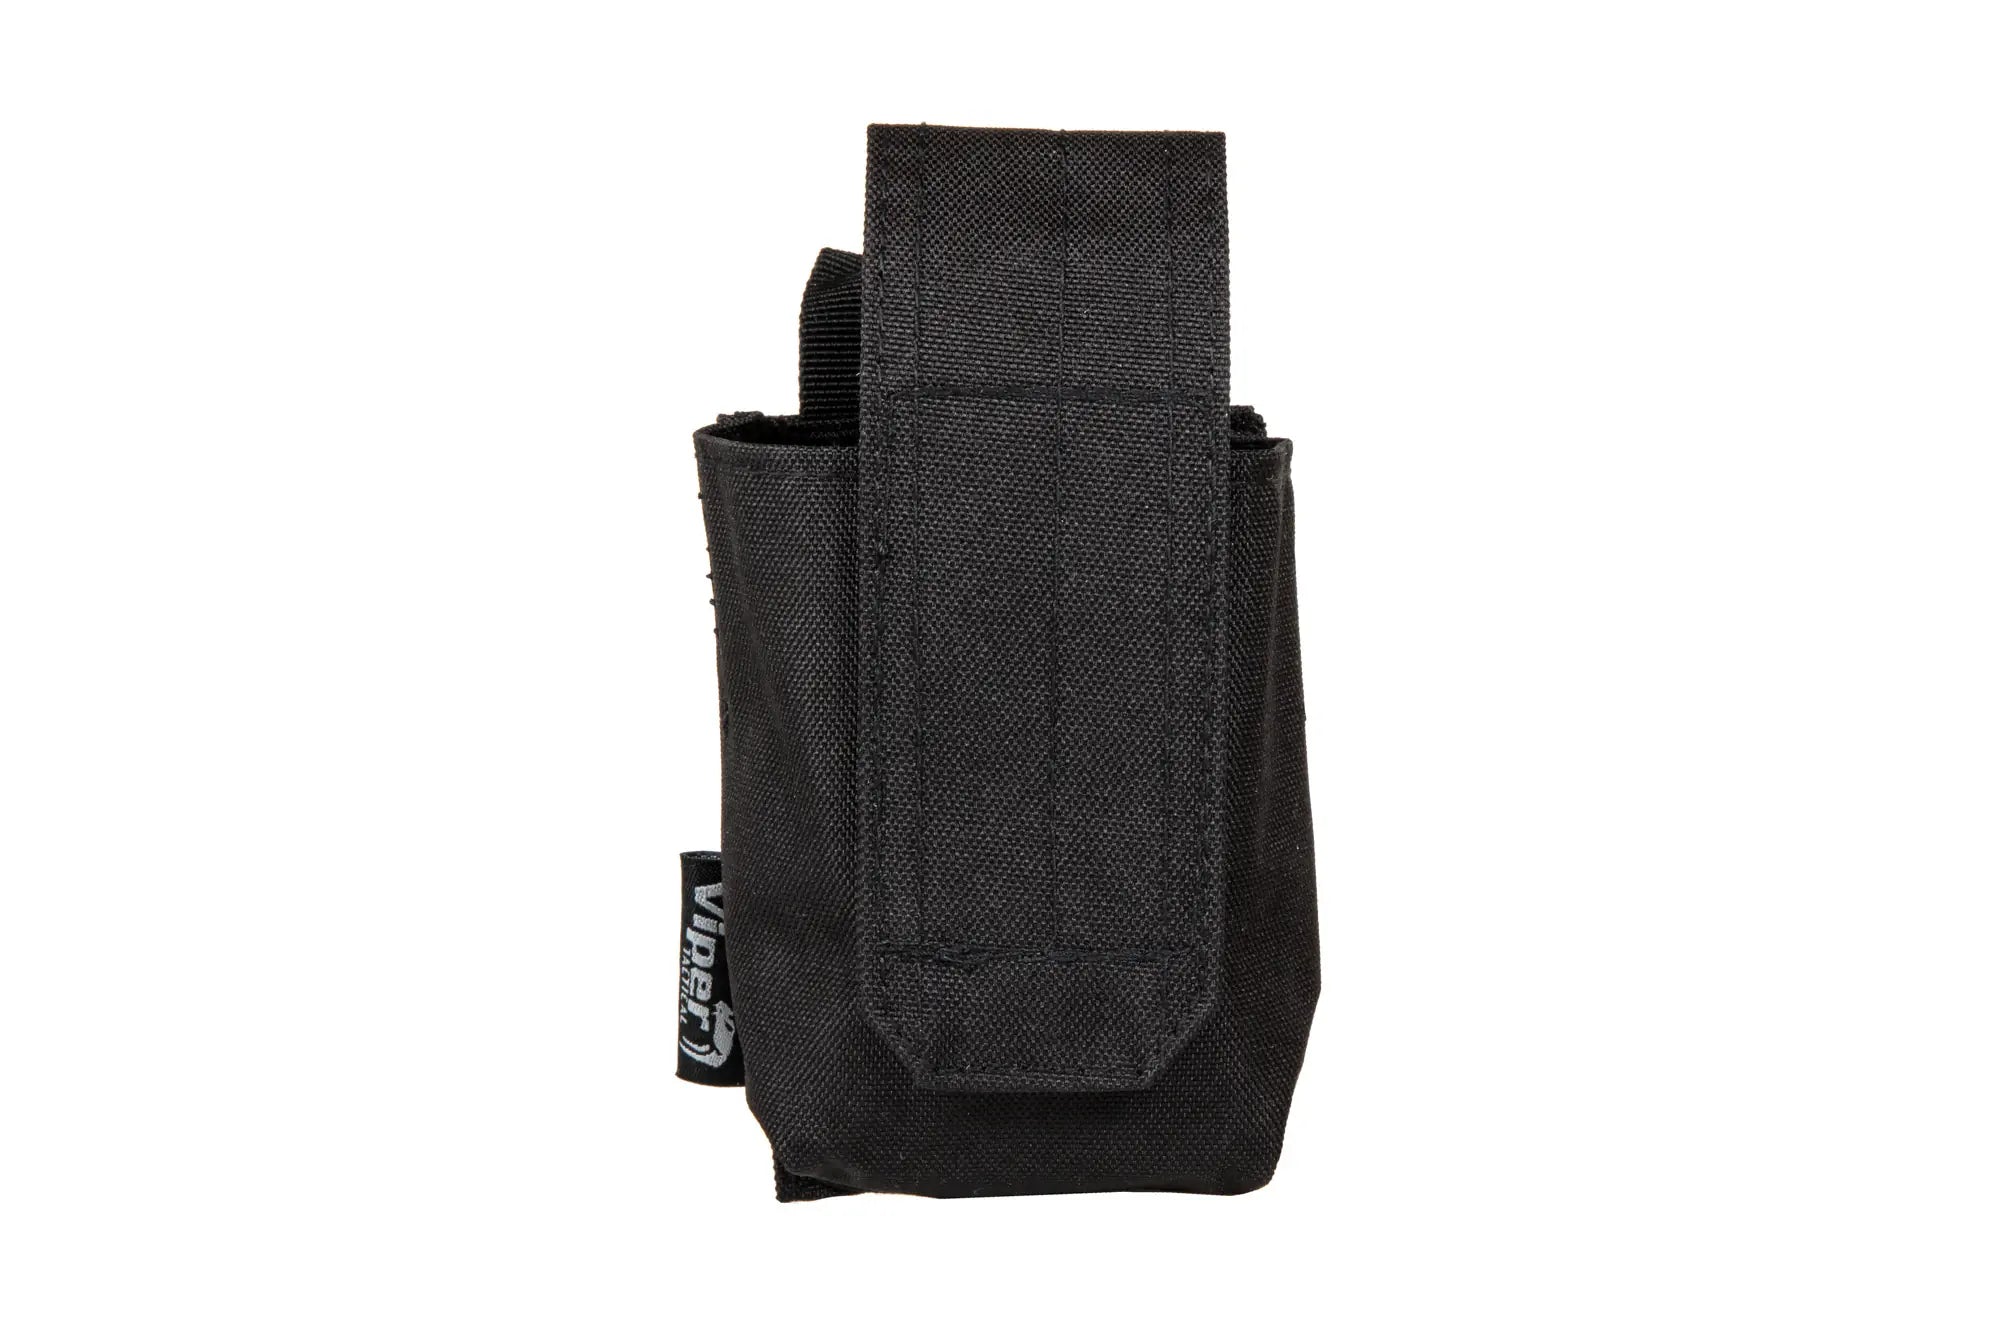 Grenade pouch - Black-1